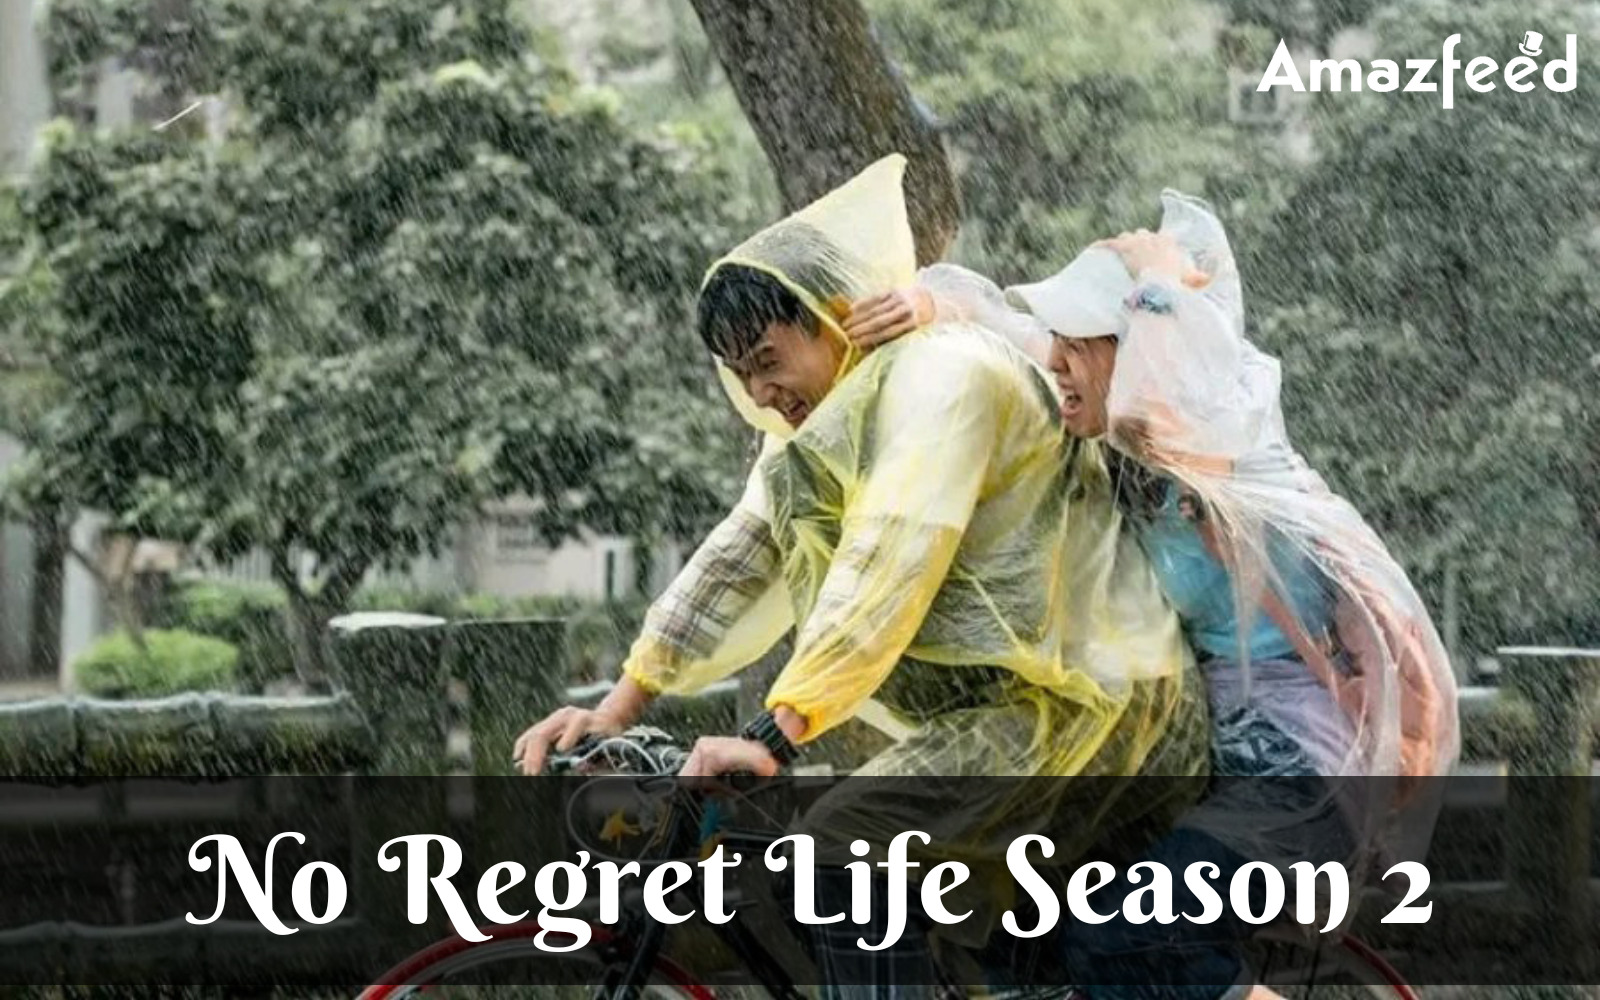 No Regret Life Season 2 release date